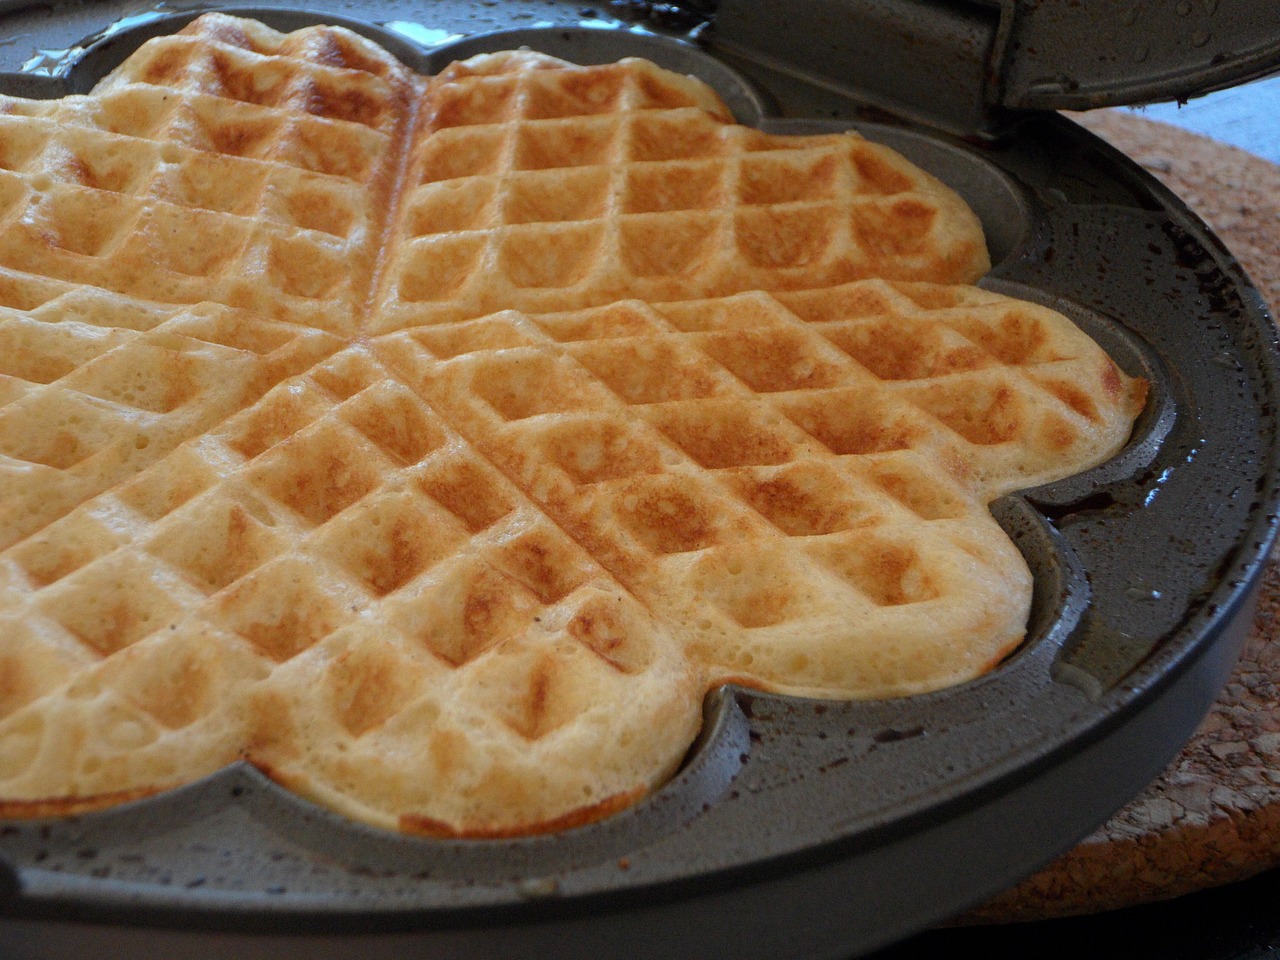 Resep Waffle, Gambar oleh M W dari Pixabay